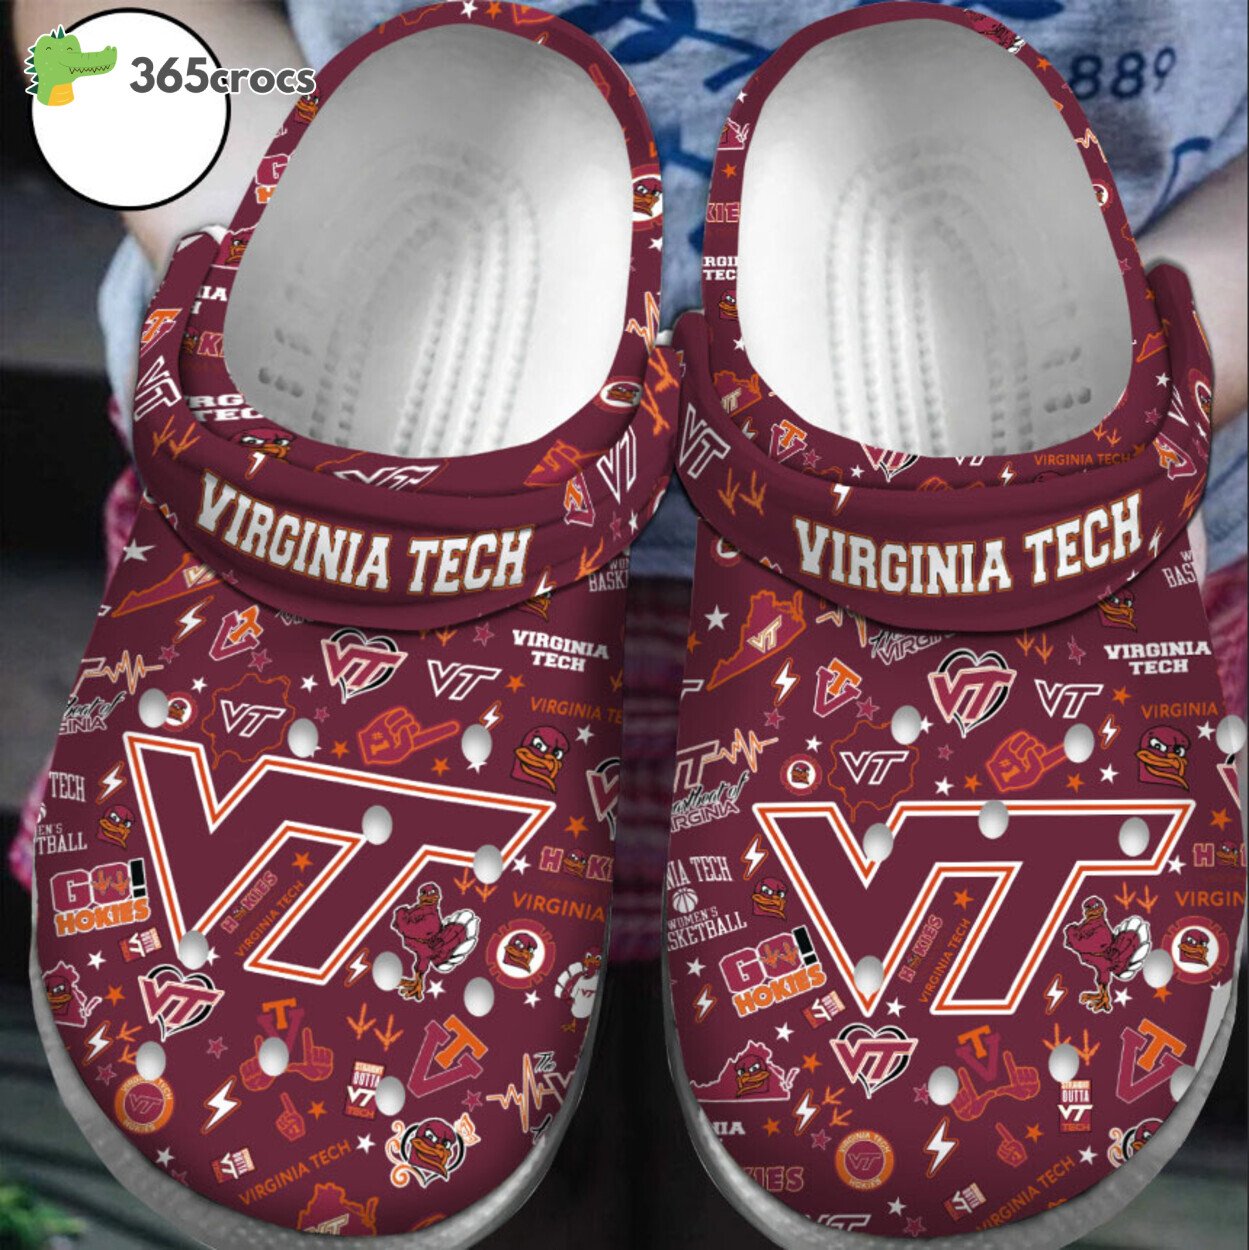 Premium Virginia Tech NCAA Sport Crocss Clogs Shoes